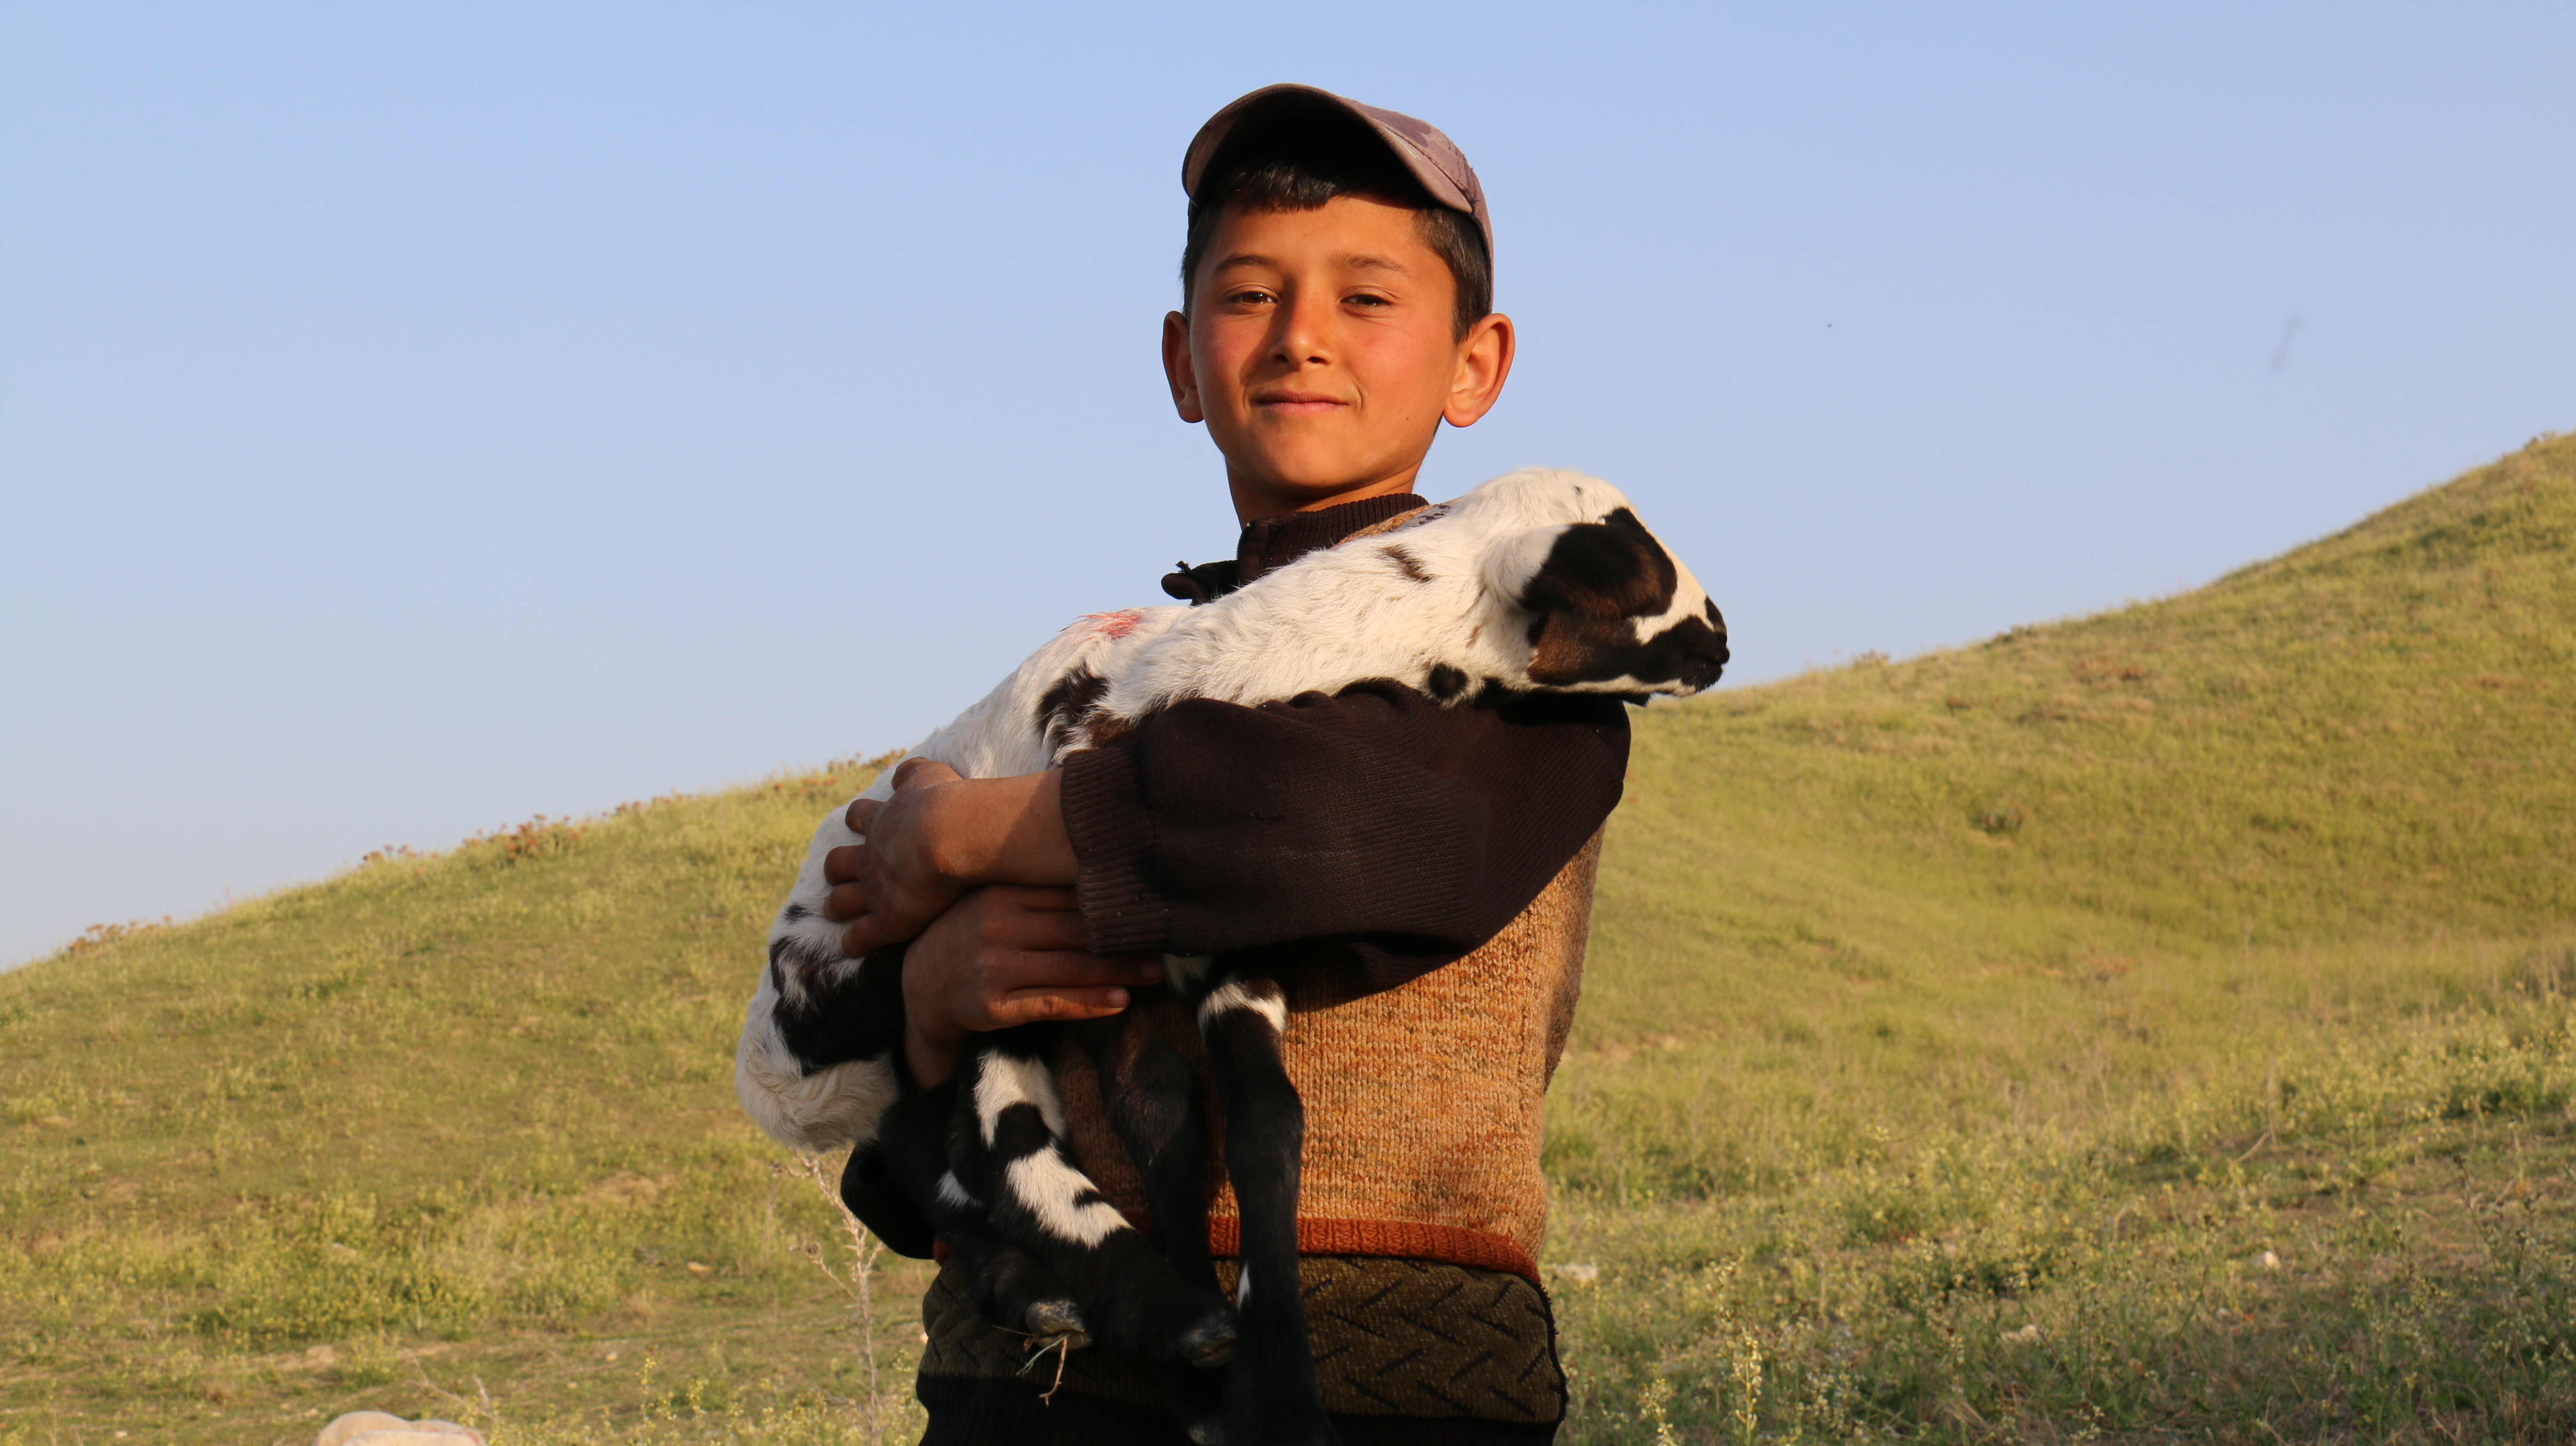 Bpy herder in Turkey